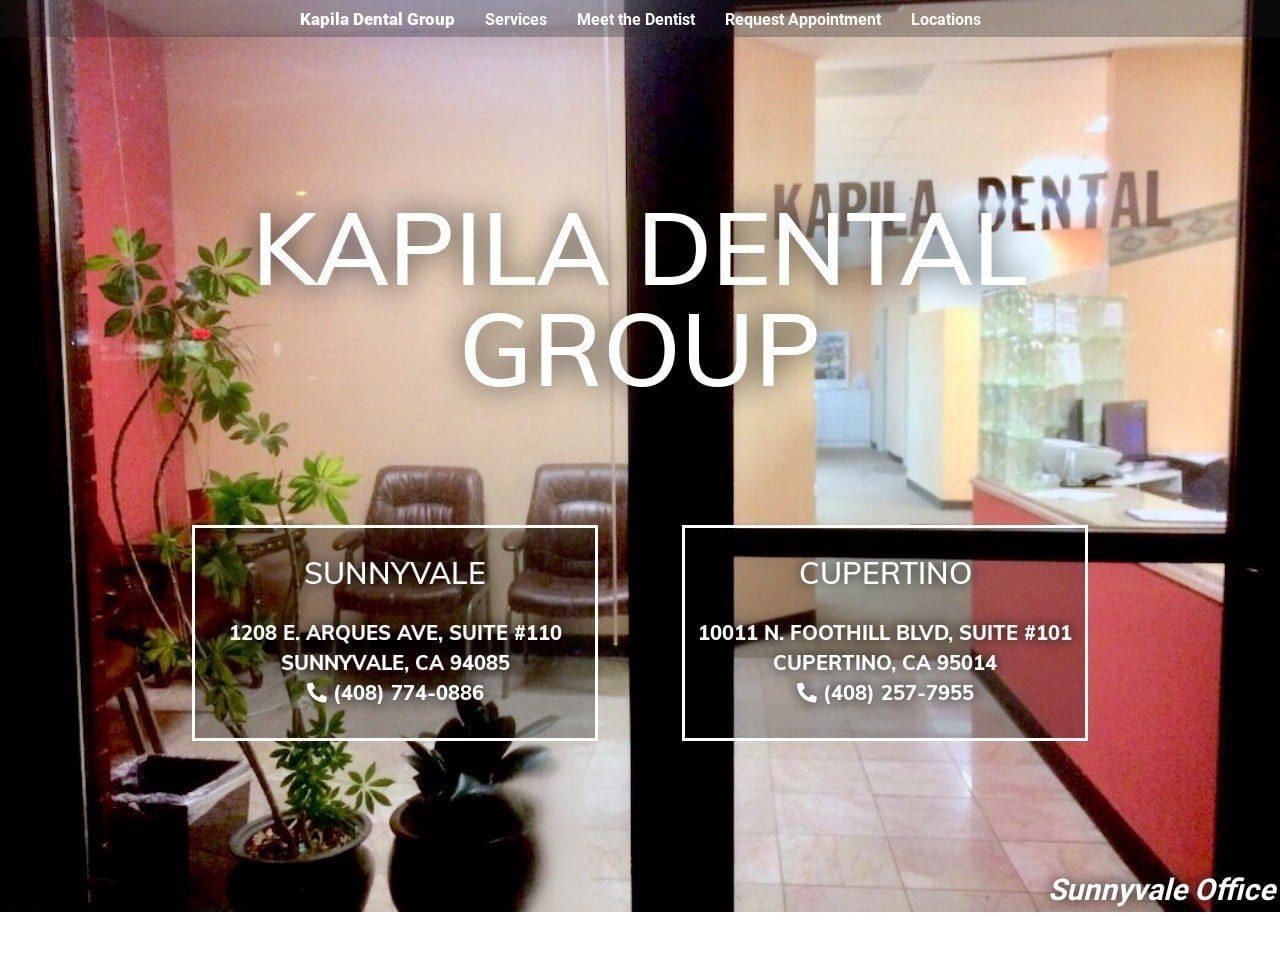 Kapila Dental Group Website Screenshot from kapiladental.com